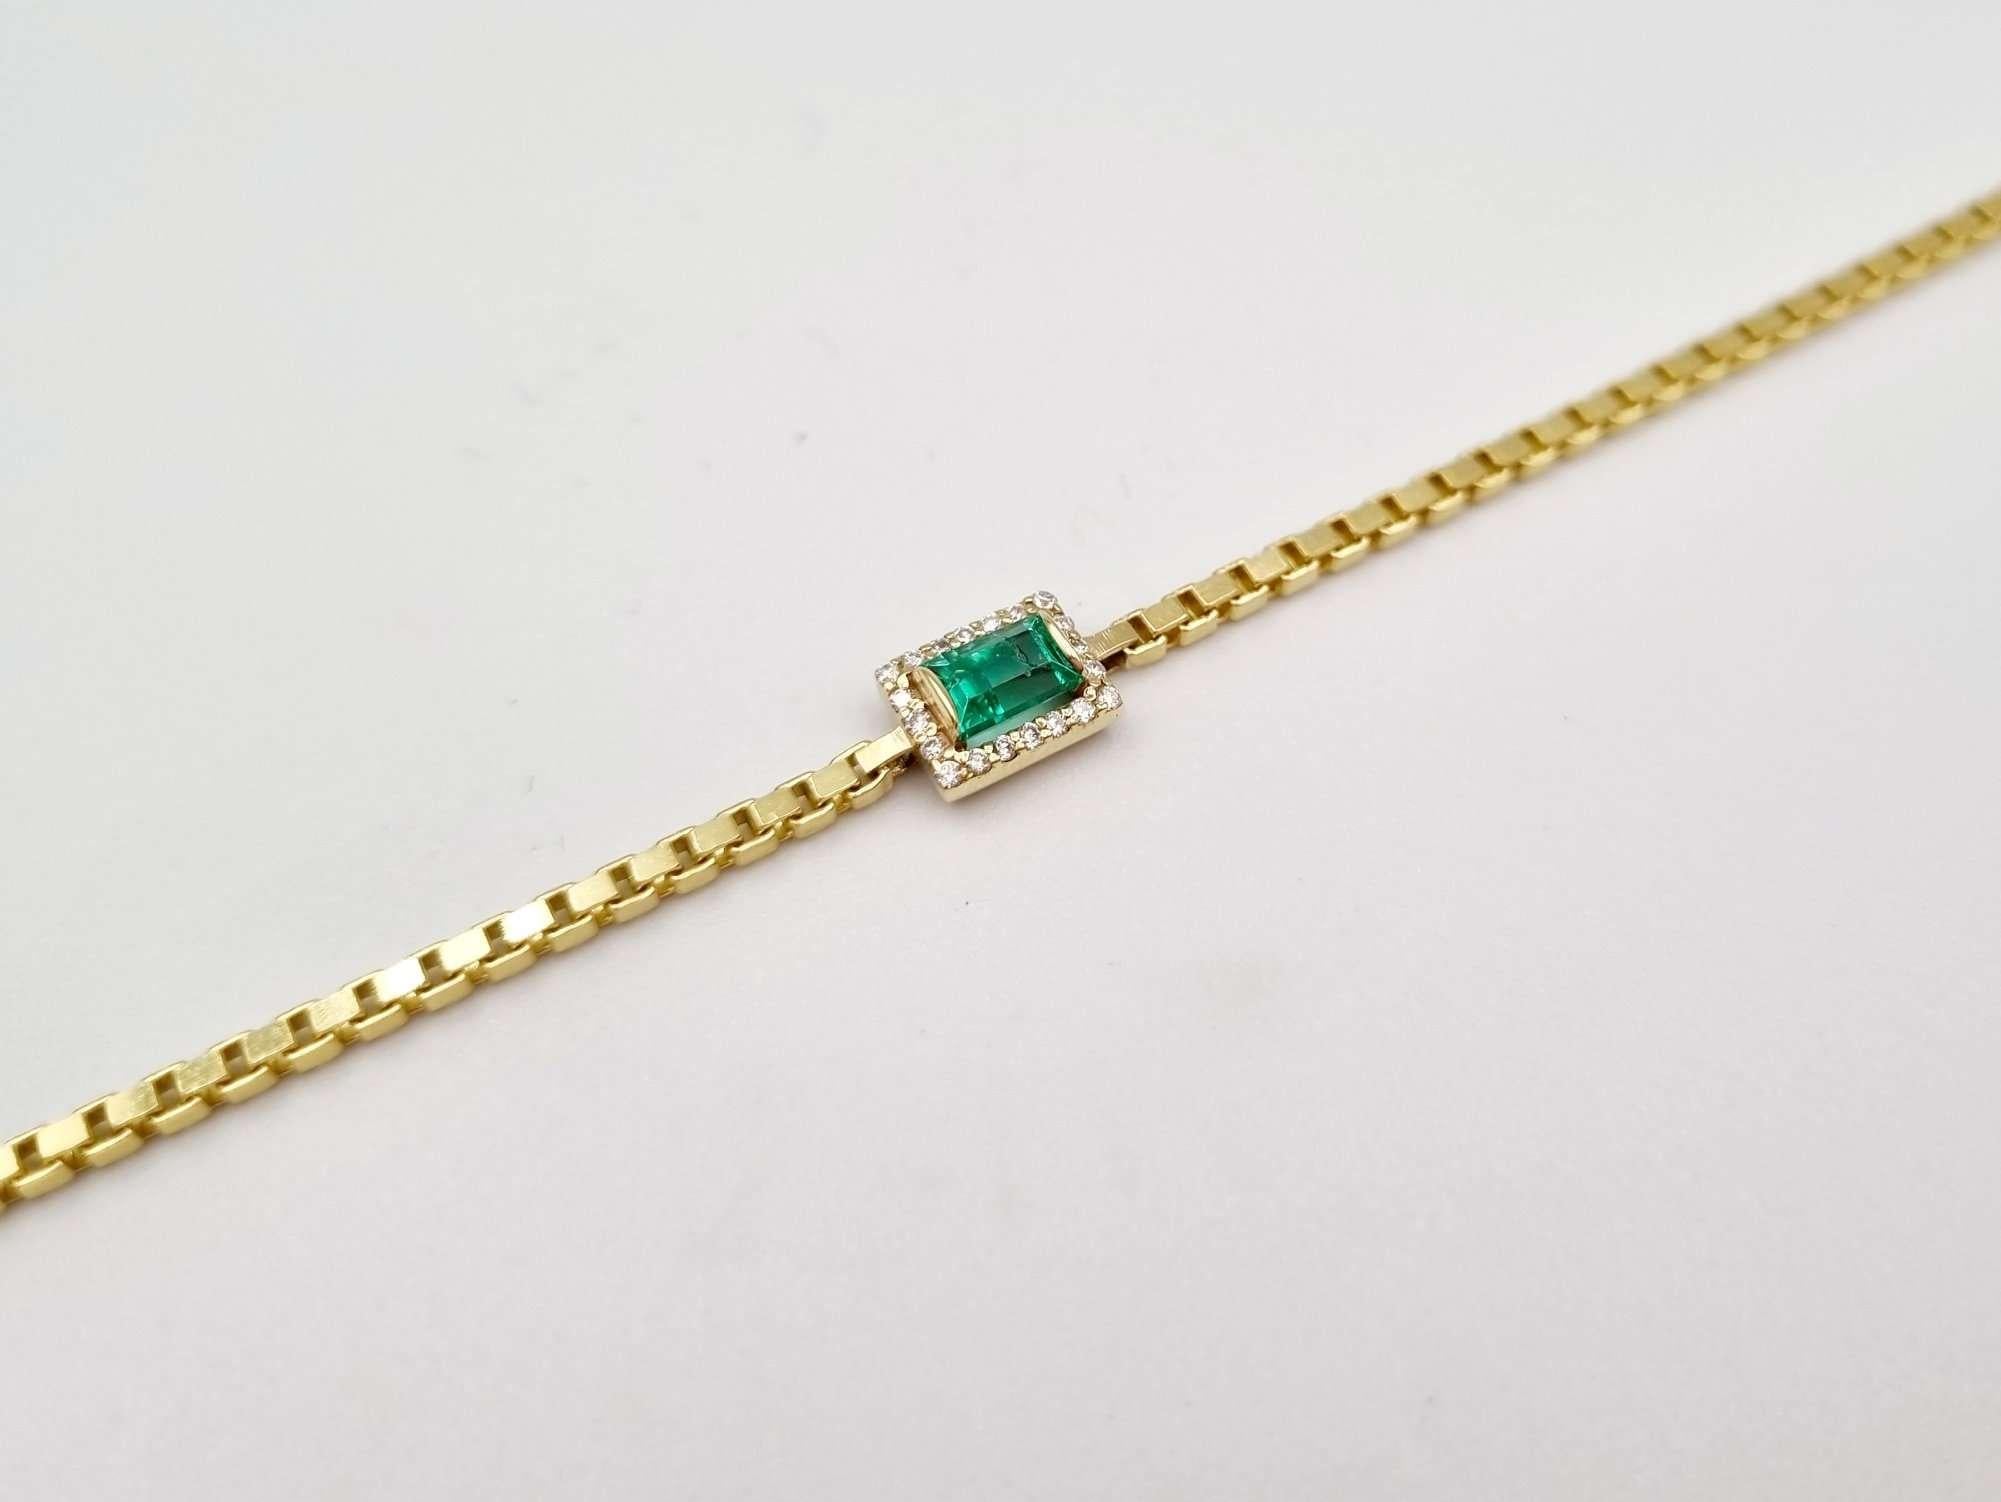 Modern 0.46 ct Emerald and Diamonds Bracelet / 14k Gold 3MM Chainbox Link Bracelet